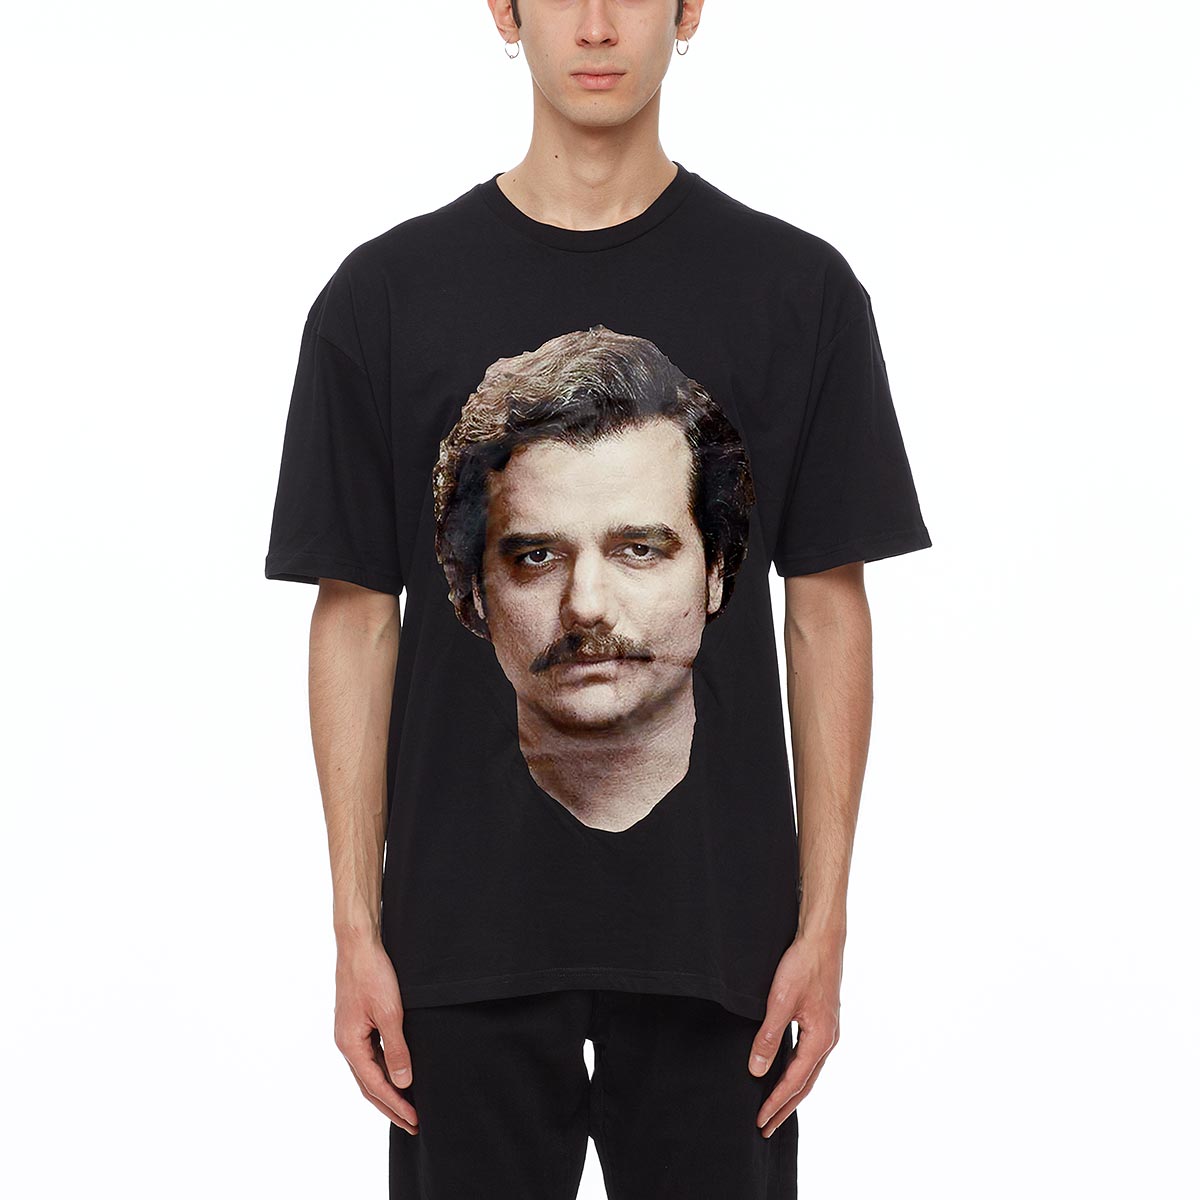 IH NOM UH NIT Pablo t-shirt